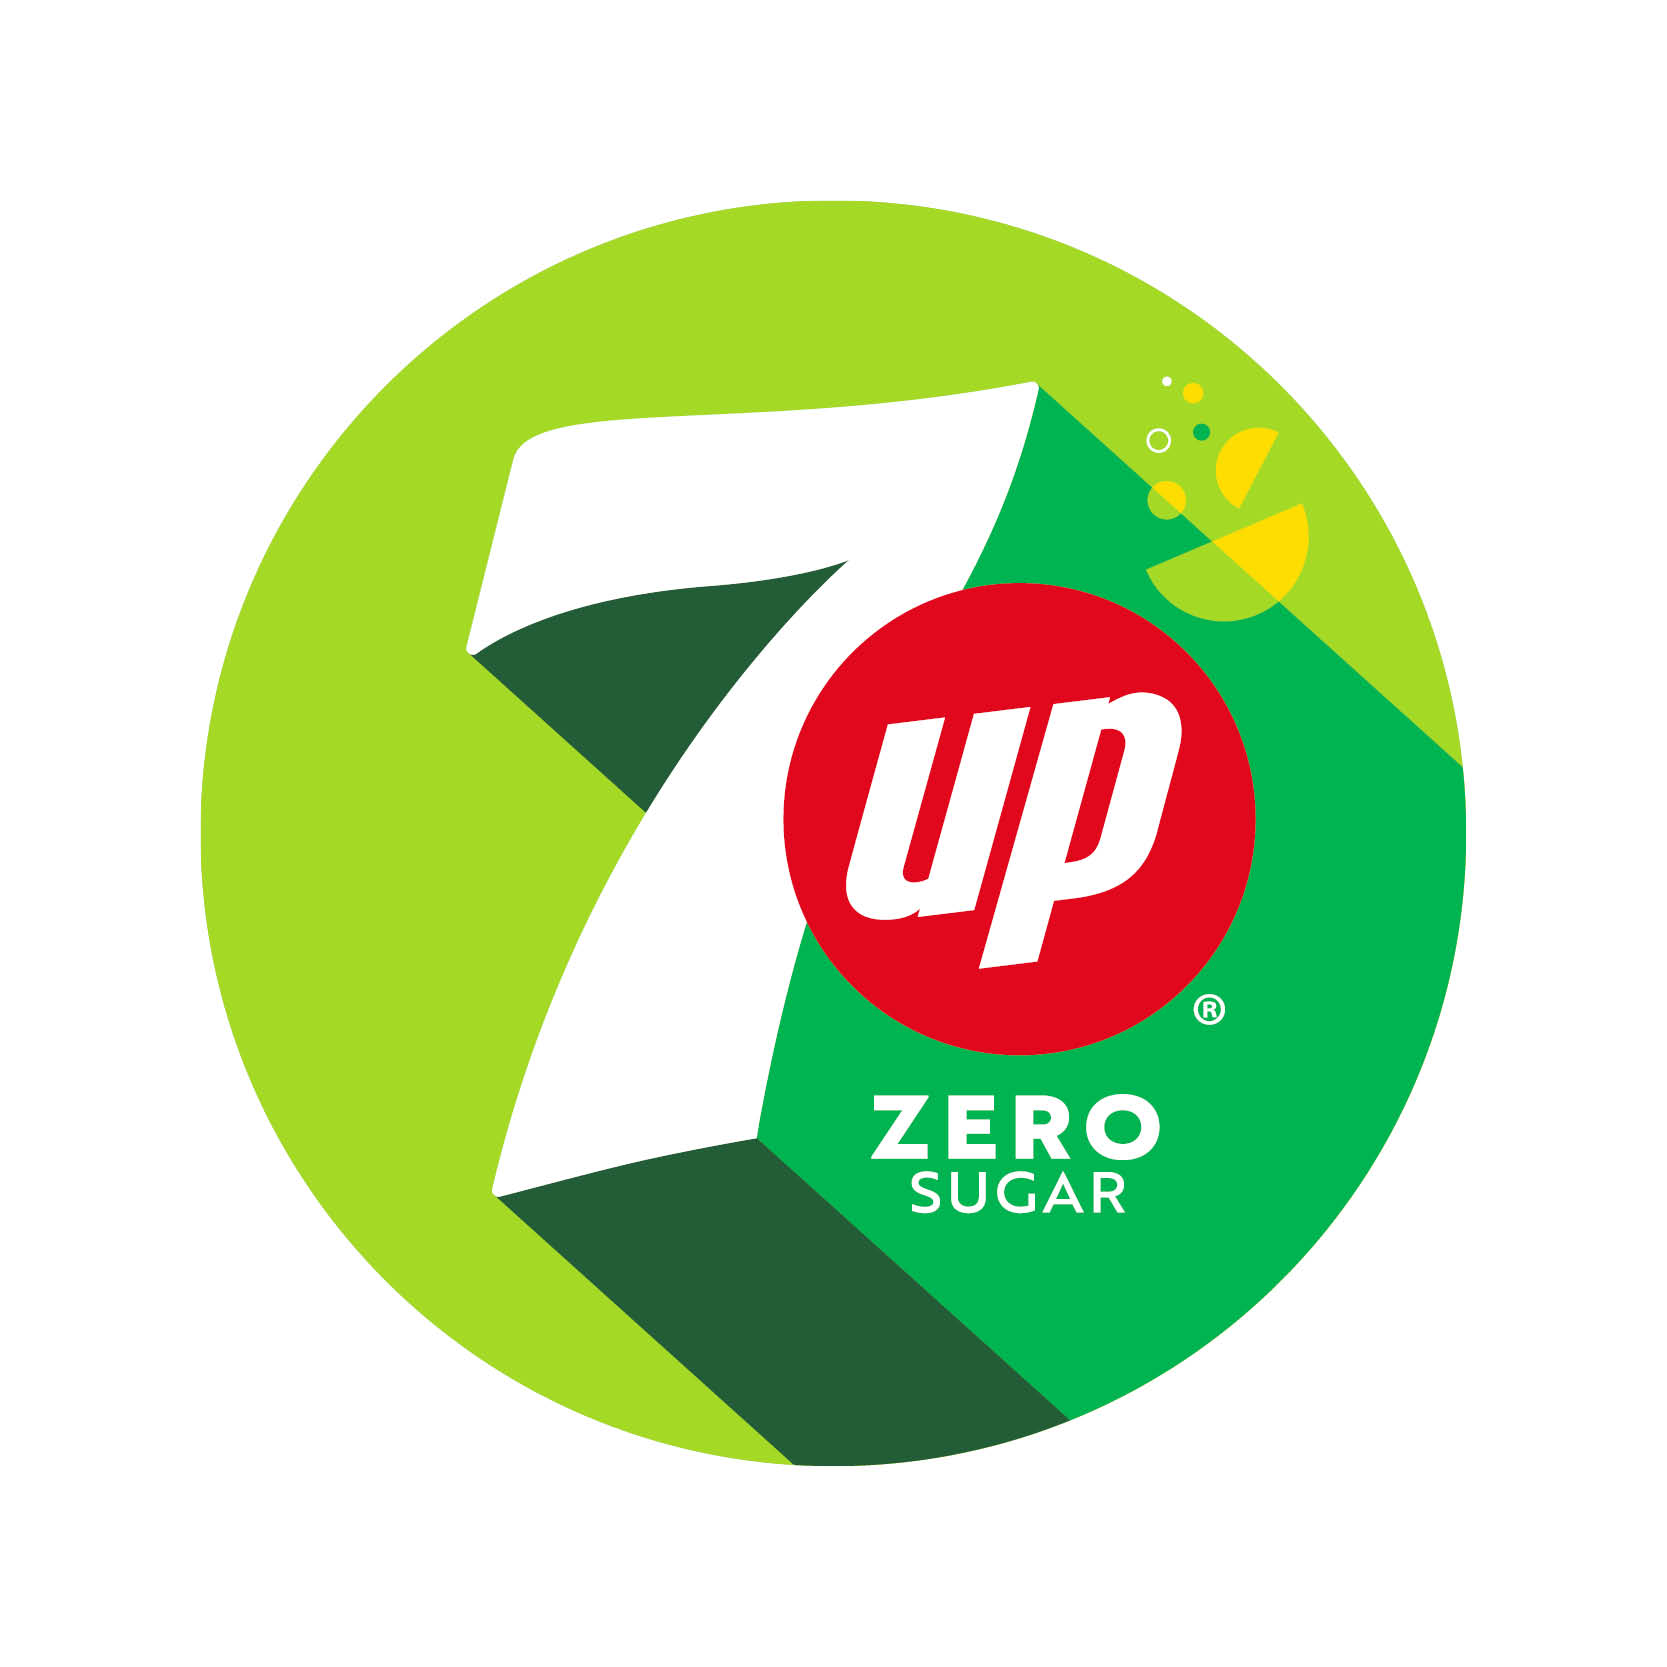 7Up Zero Sugar